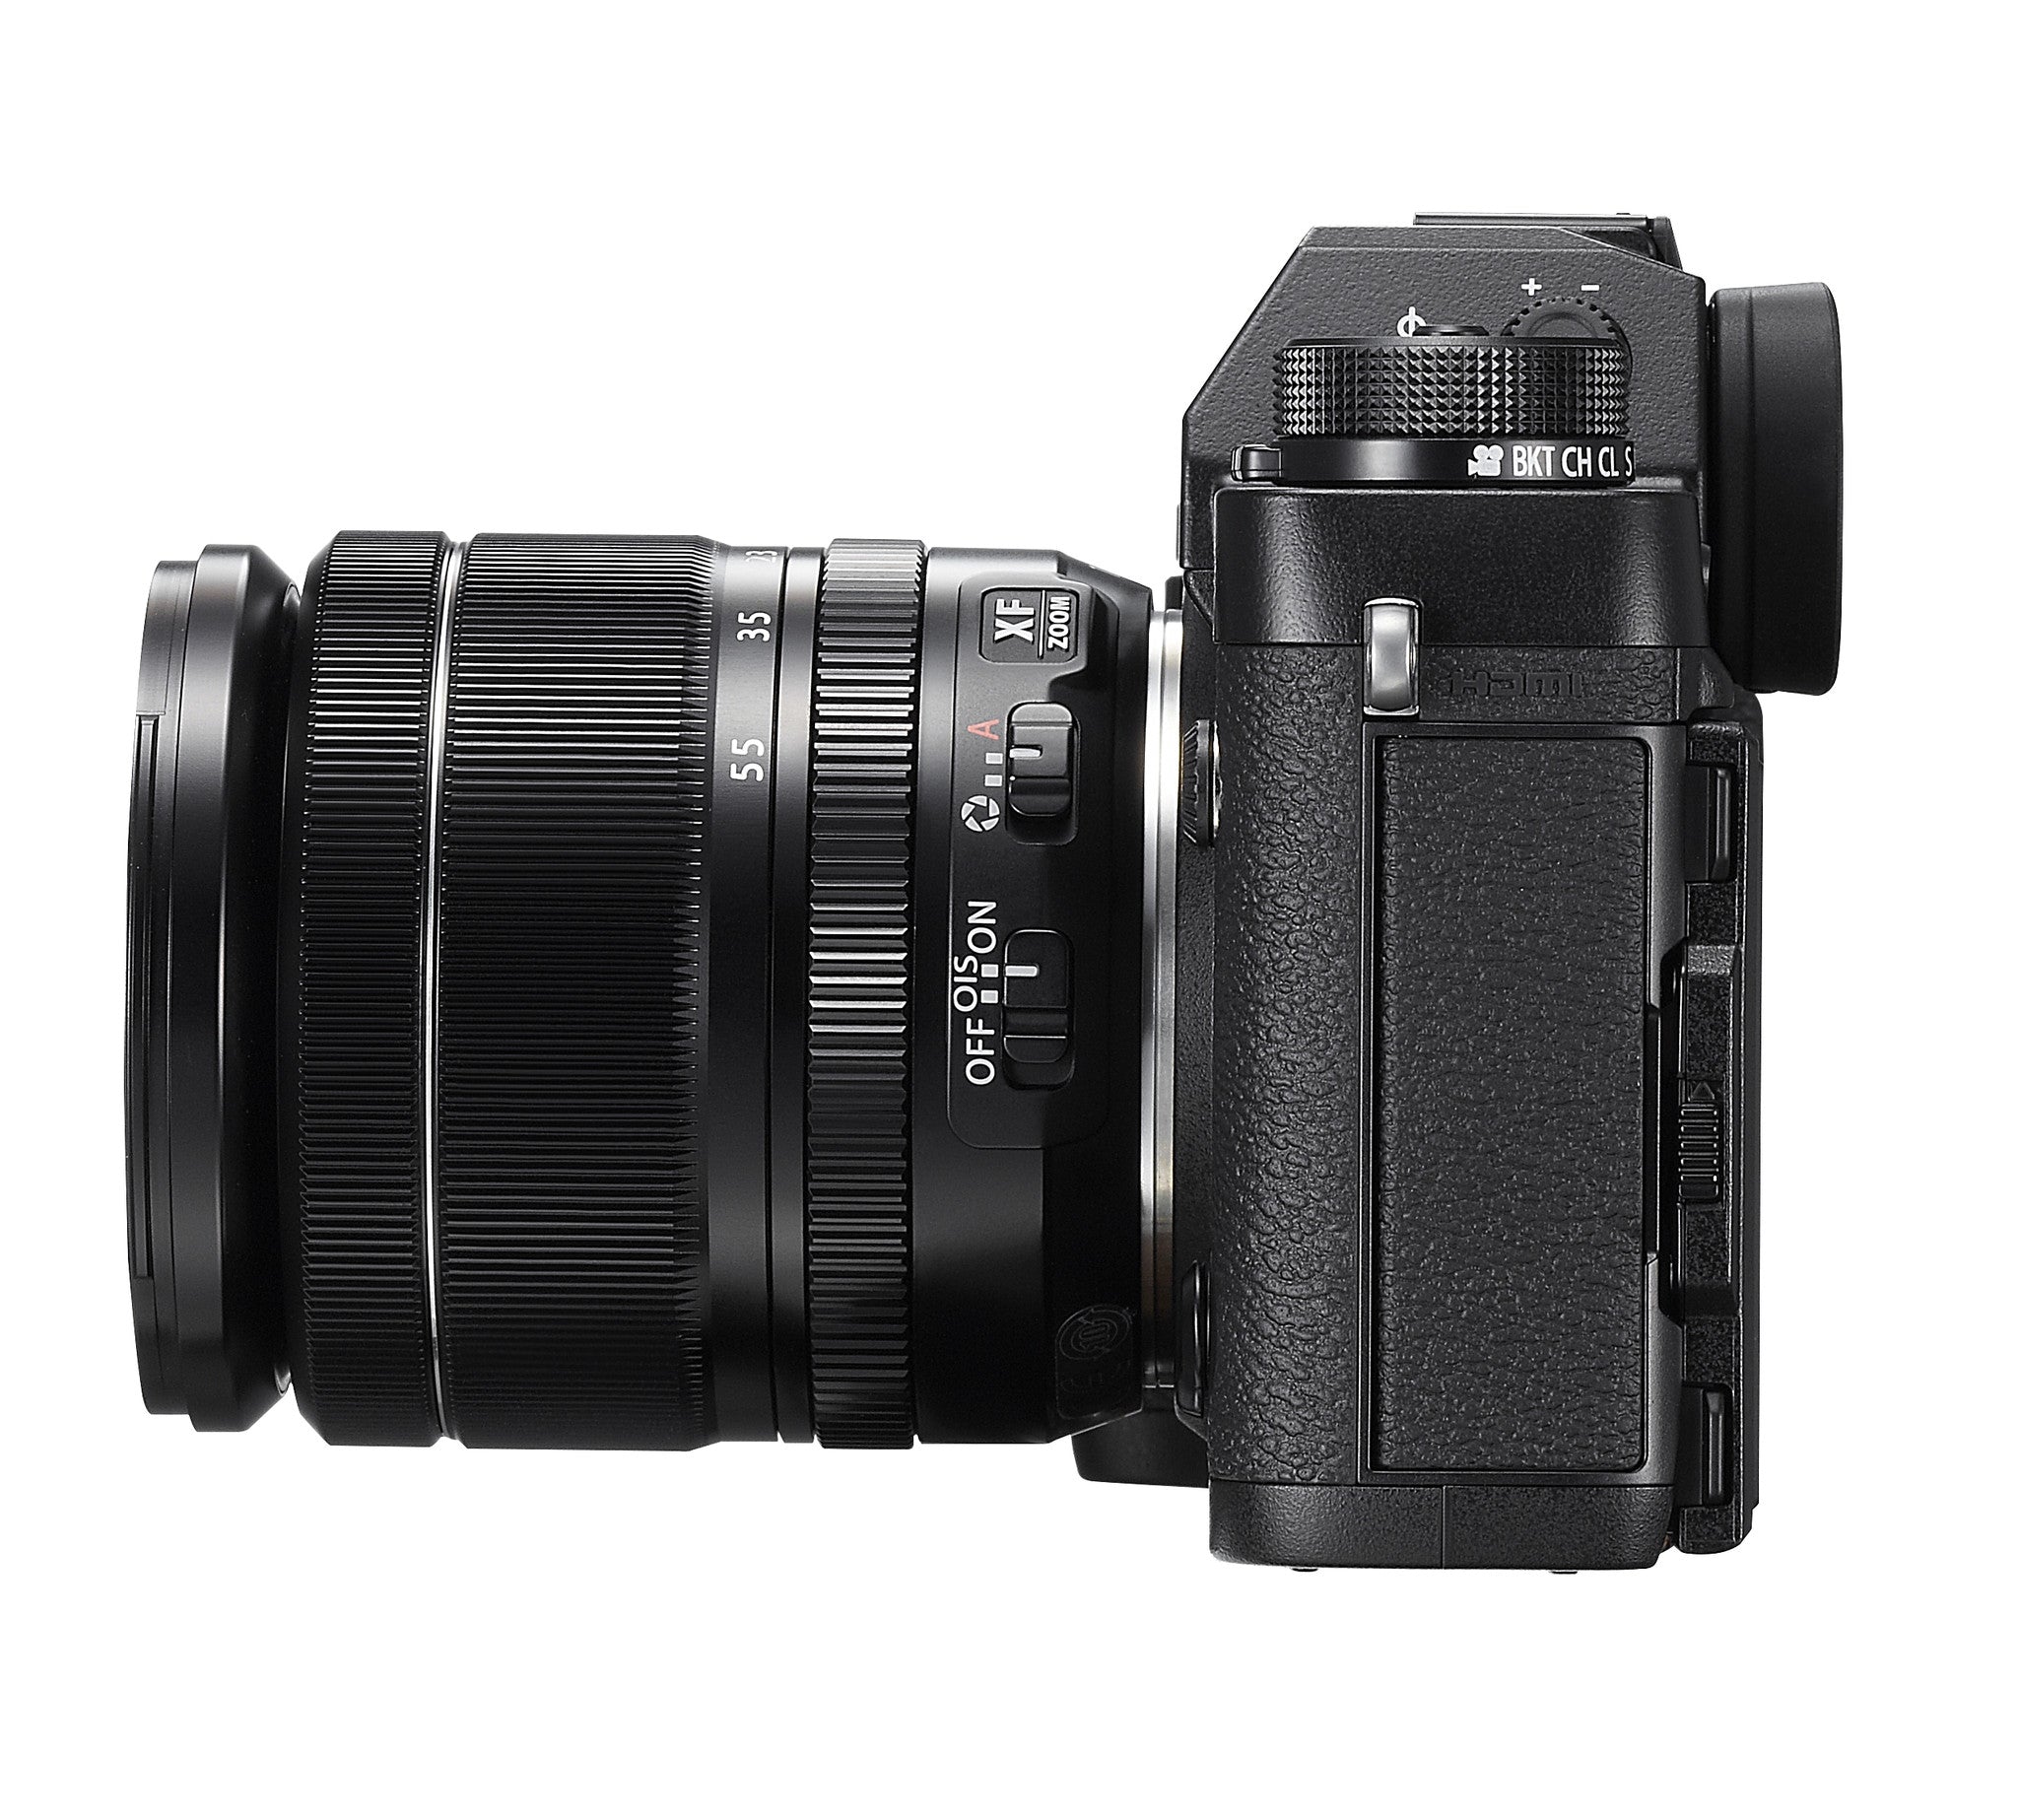 Fujifilm X-T2 Digital Camera w/ 18-55mm Lens Kit (Black), camera mirrorless cameras, Fujifilm - Pictureline  - 8